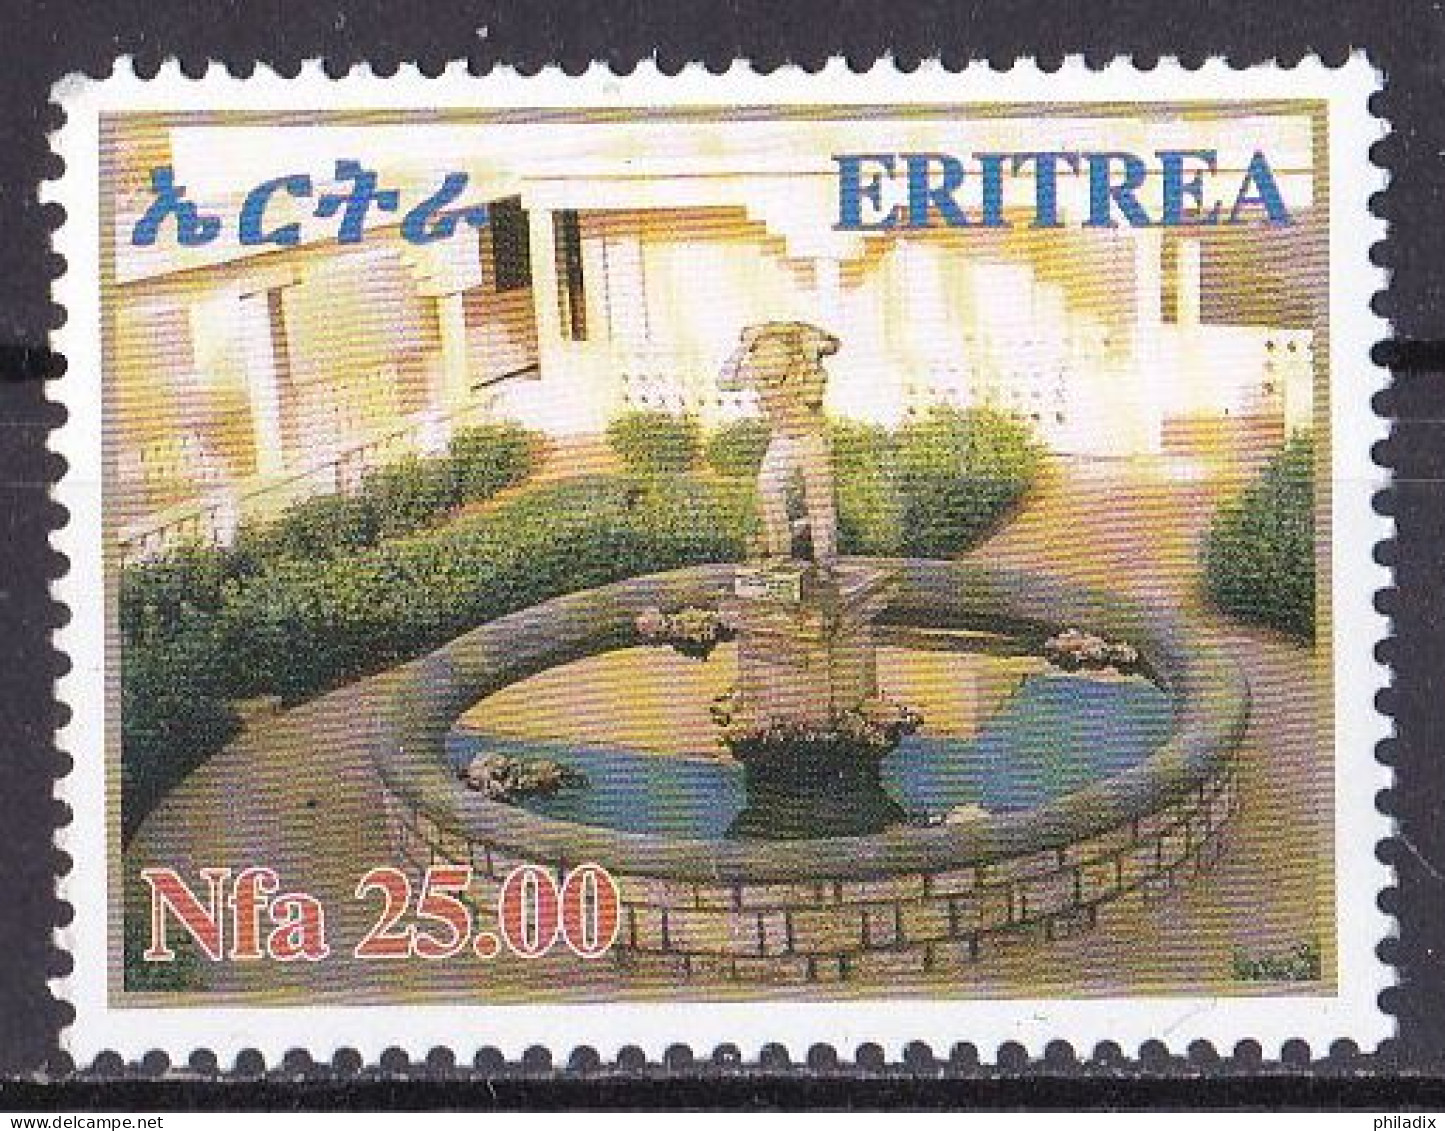 Eritrea Marke Von 2006 **/MNH (A5-10) - Erythrée